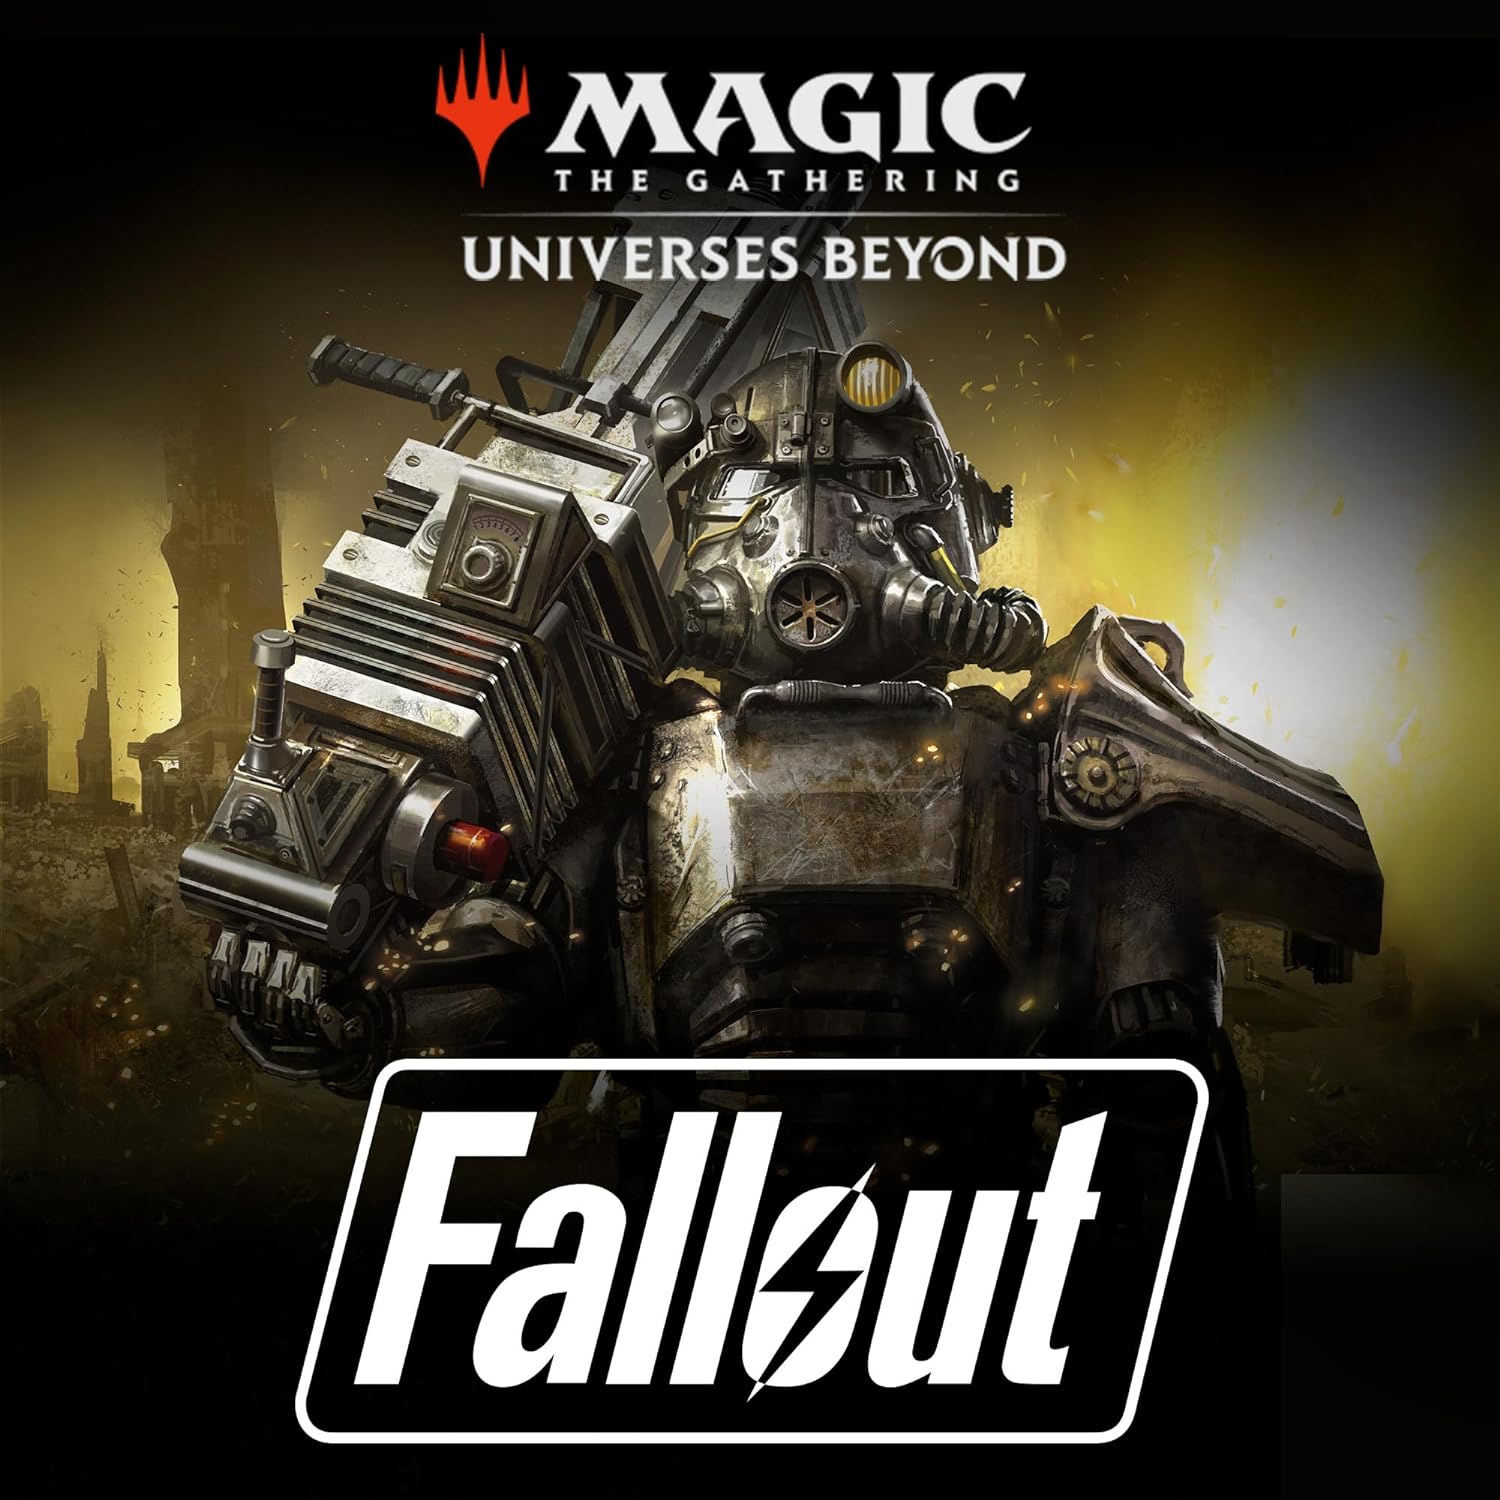 Magic the Gathering: Fallout Commander Decks & Cases